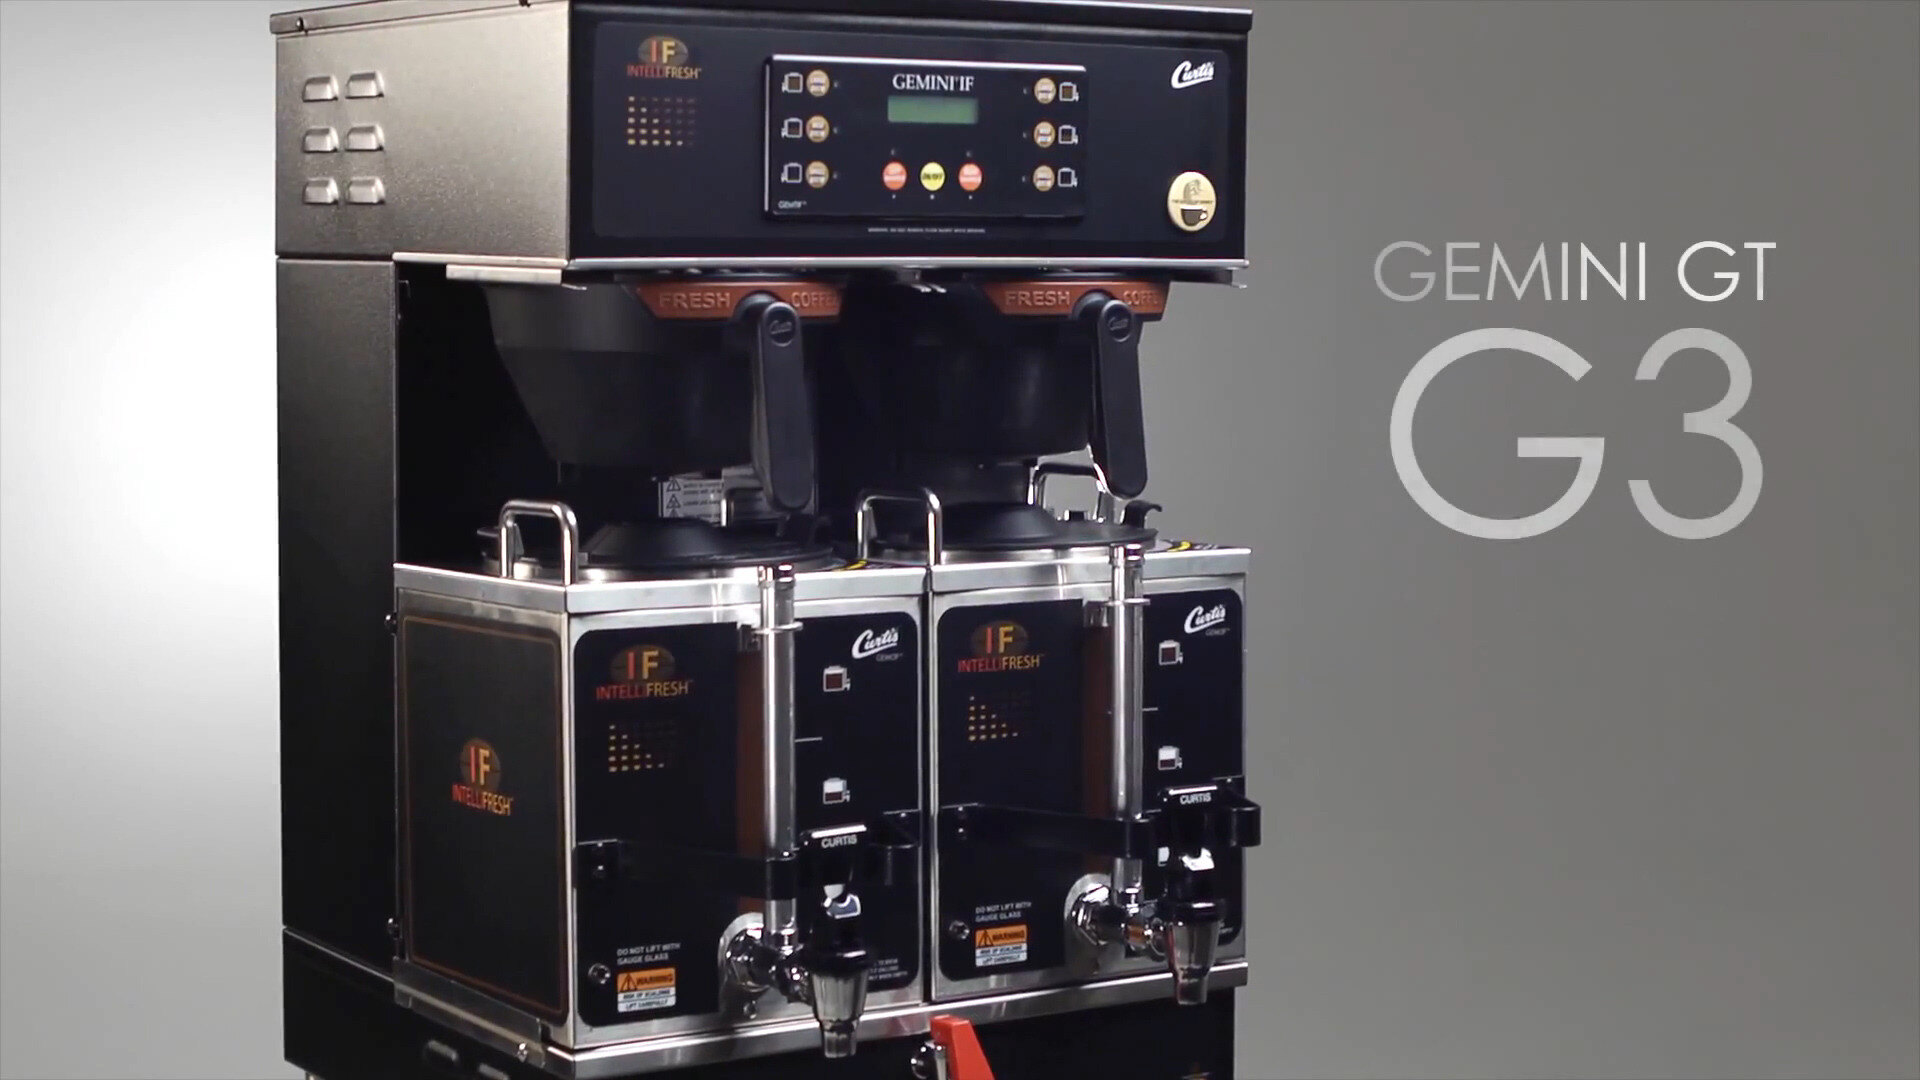 Curtis G4 GemX Gemini IntelliFresh Twin 1.5 Gallon Coffee Brewer with  FreshTrac Satellites - Best Price Guarantee!